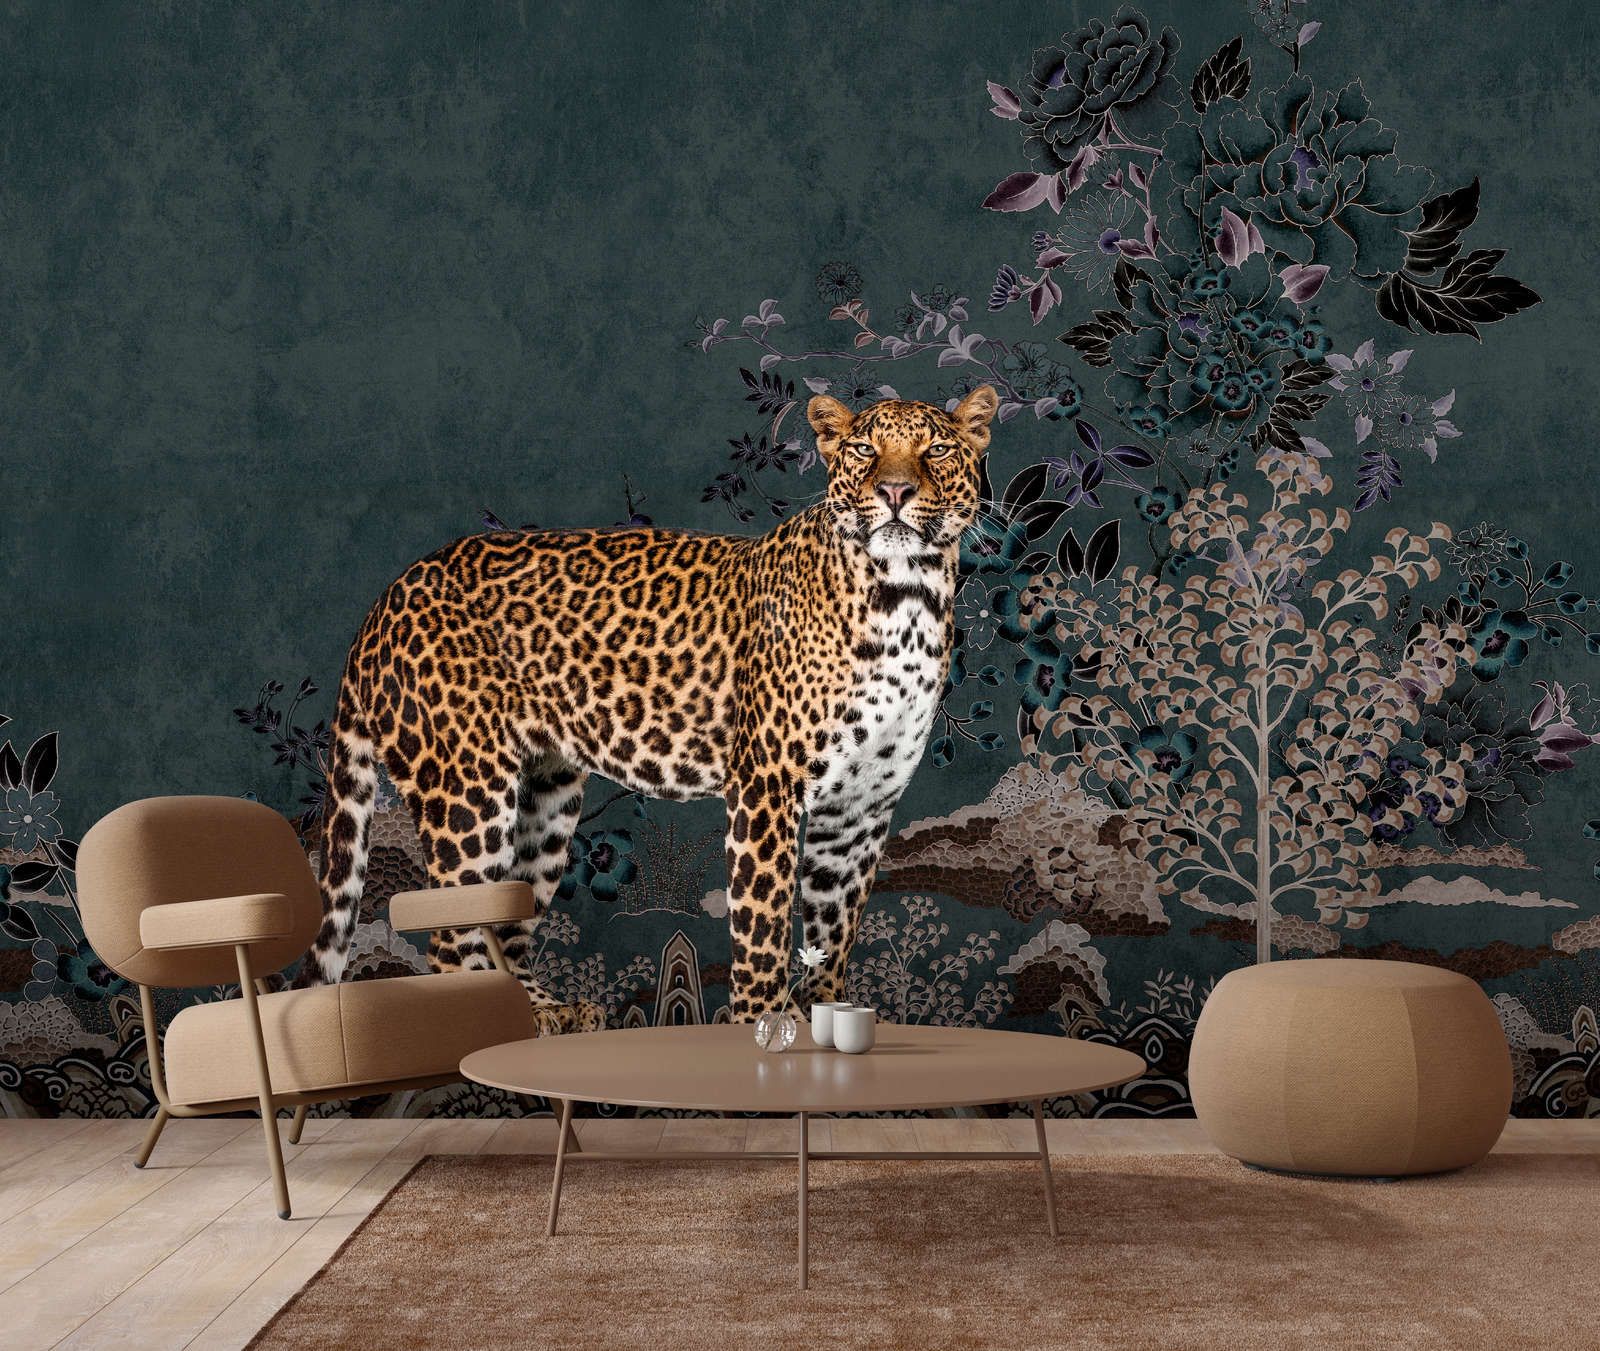             Fotomural »rani« - Motivo abstracto selva con leopardo - Tela no tejida lisa y mate
        